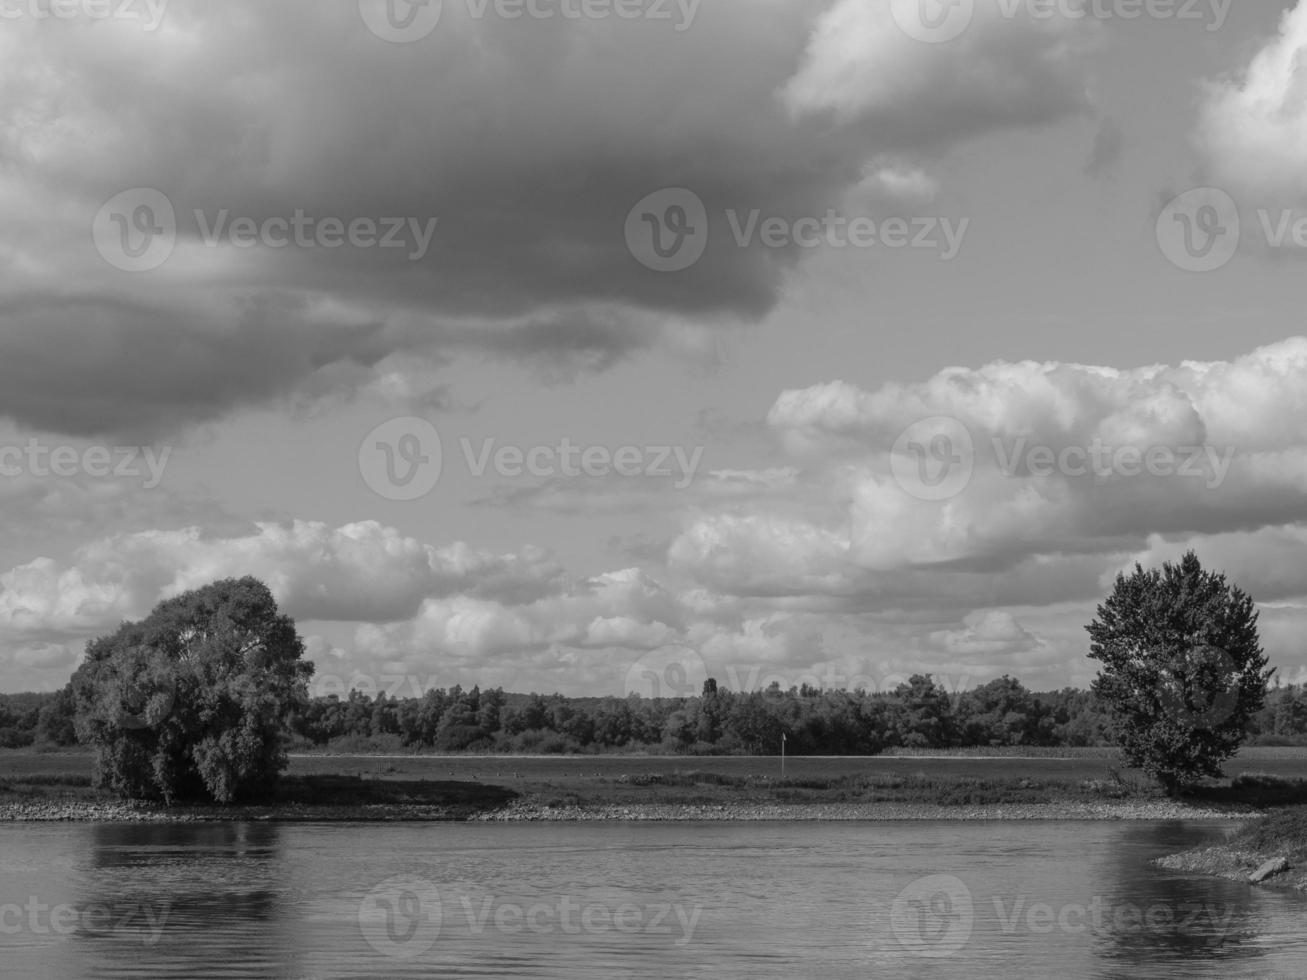 doesburg en el río ijssel foto